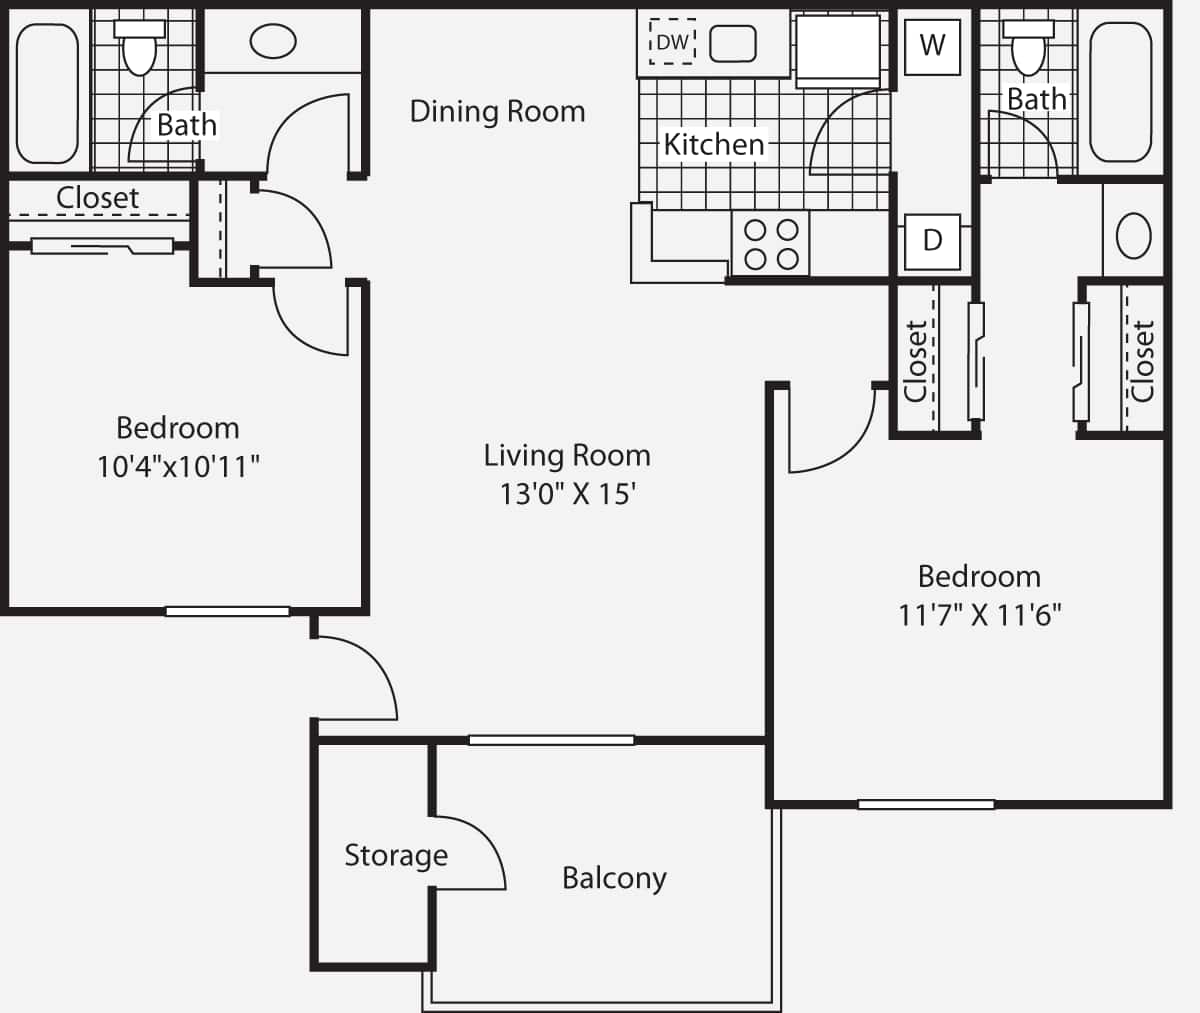 Floorplan diagram for The Sequoia, showing 2 bedroom